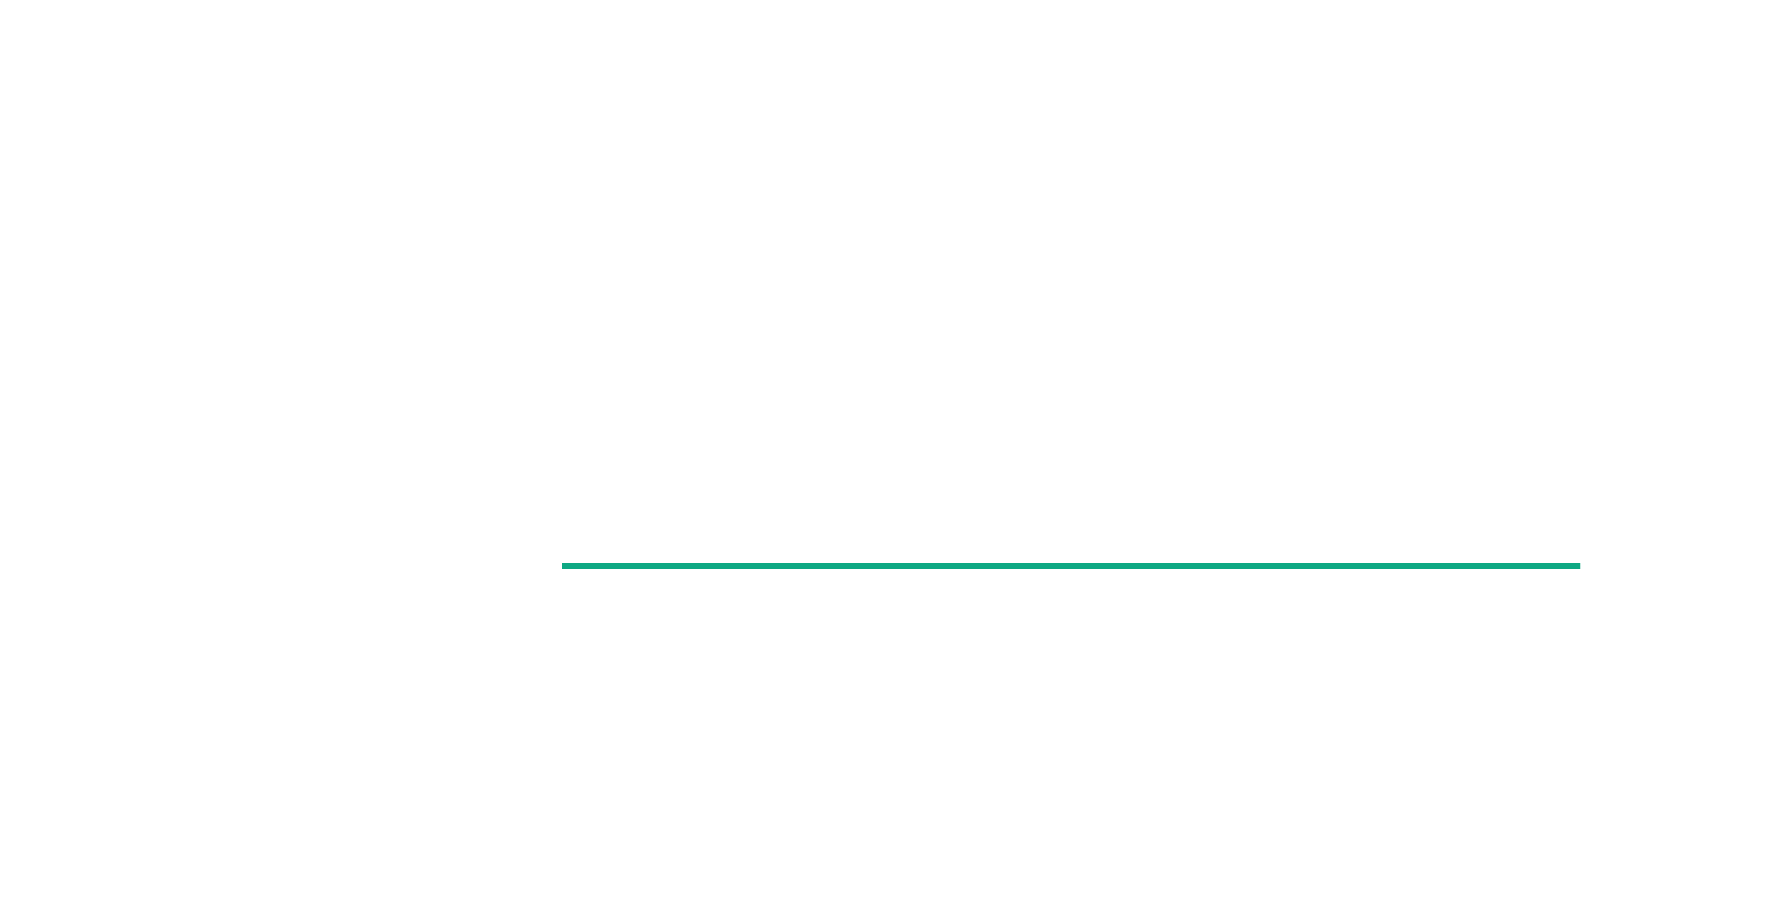 International Year One - University of Greenwich International College logo